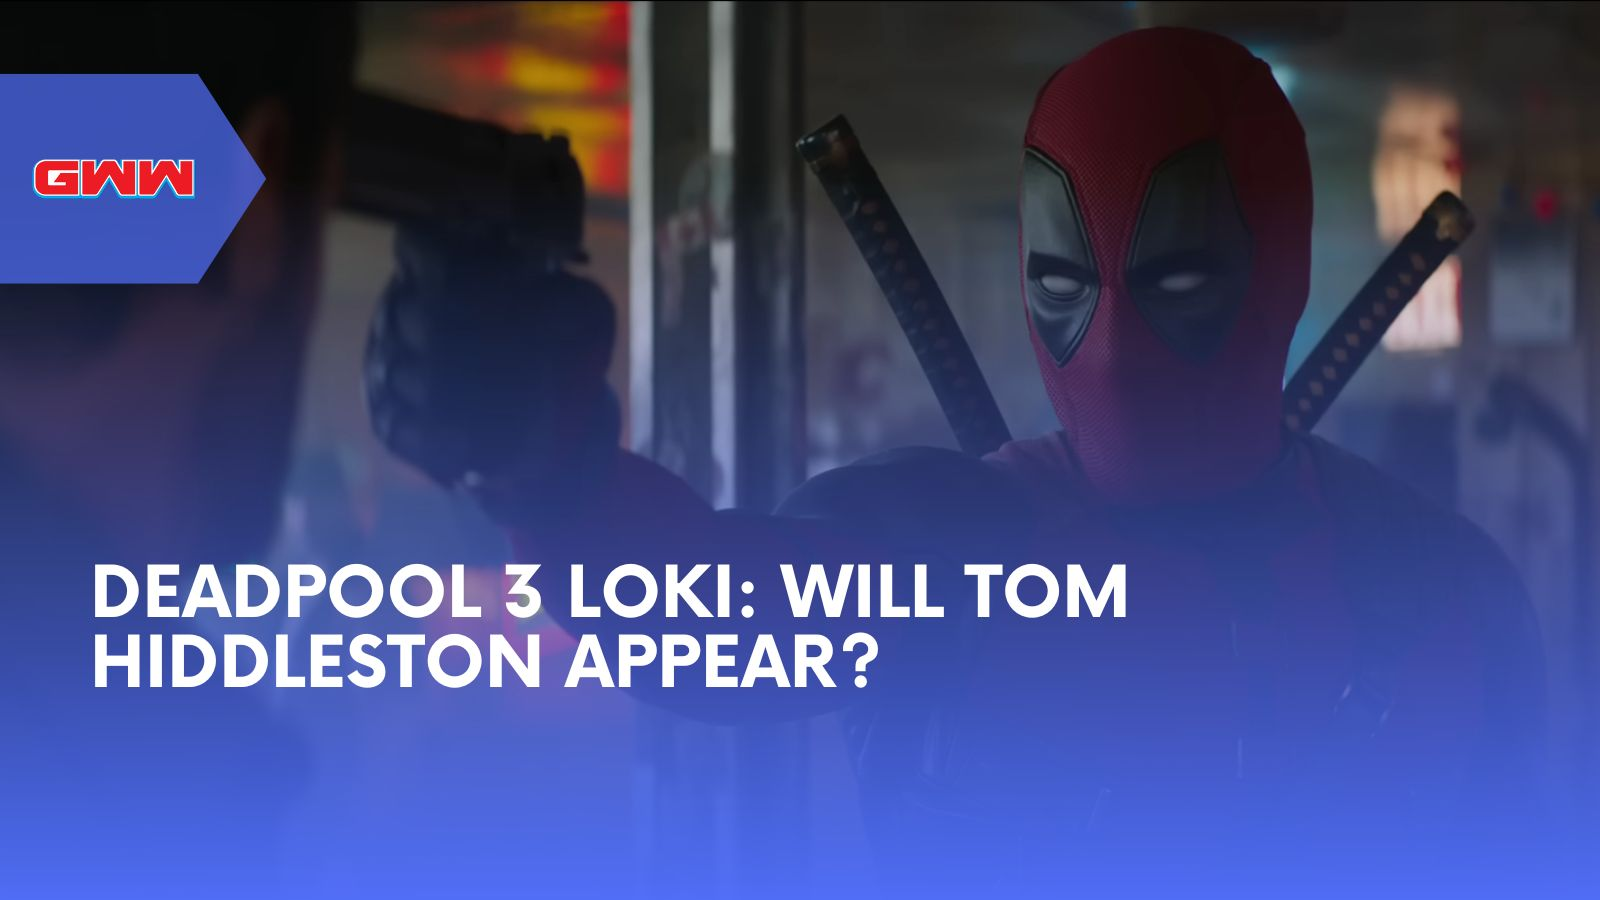 Deadpool 3 Loki: Will Tom Hiddleston Appear?